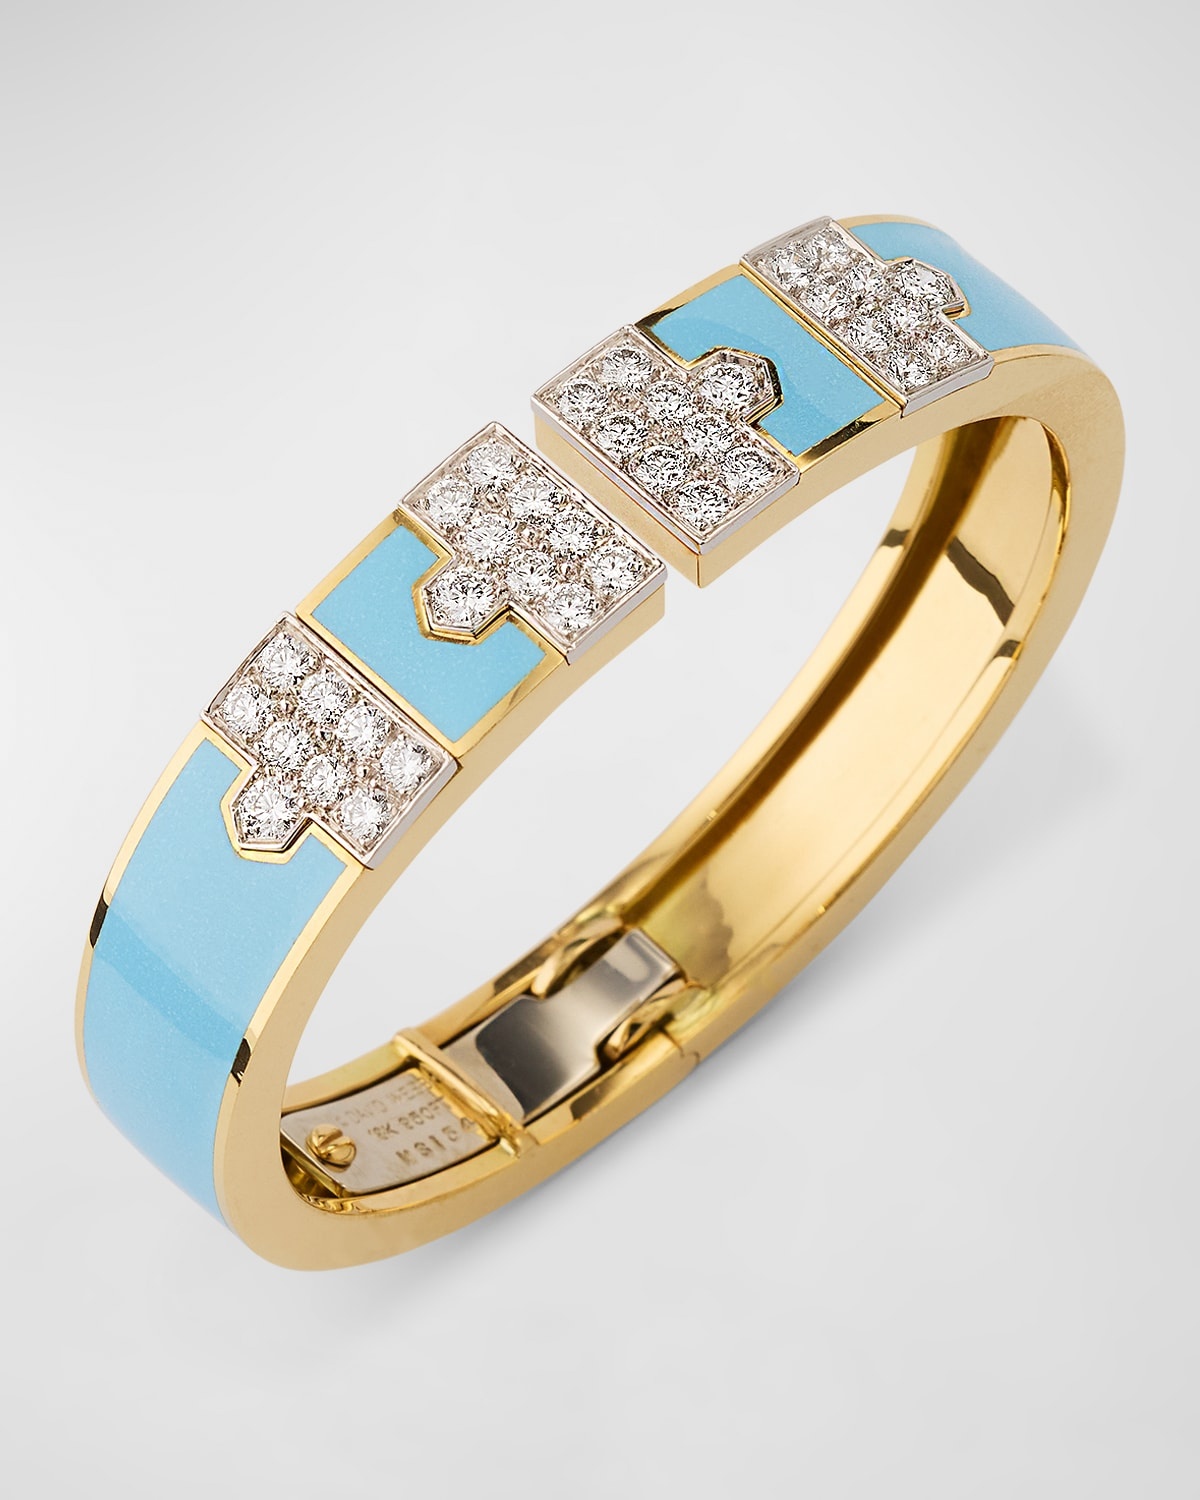 18K Yellow Gold and Platinum Lane Bracelet with Light Blue Enamel - 3